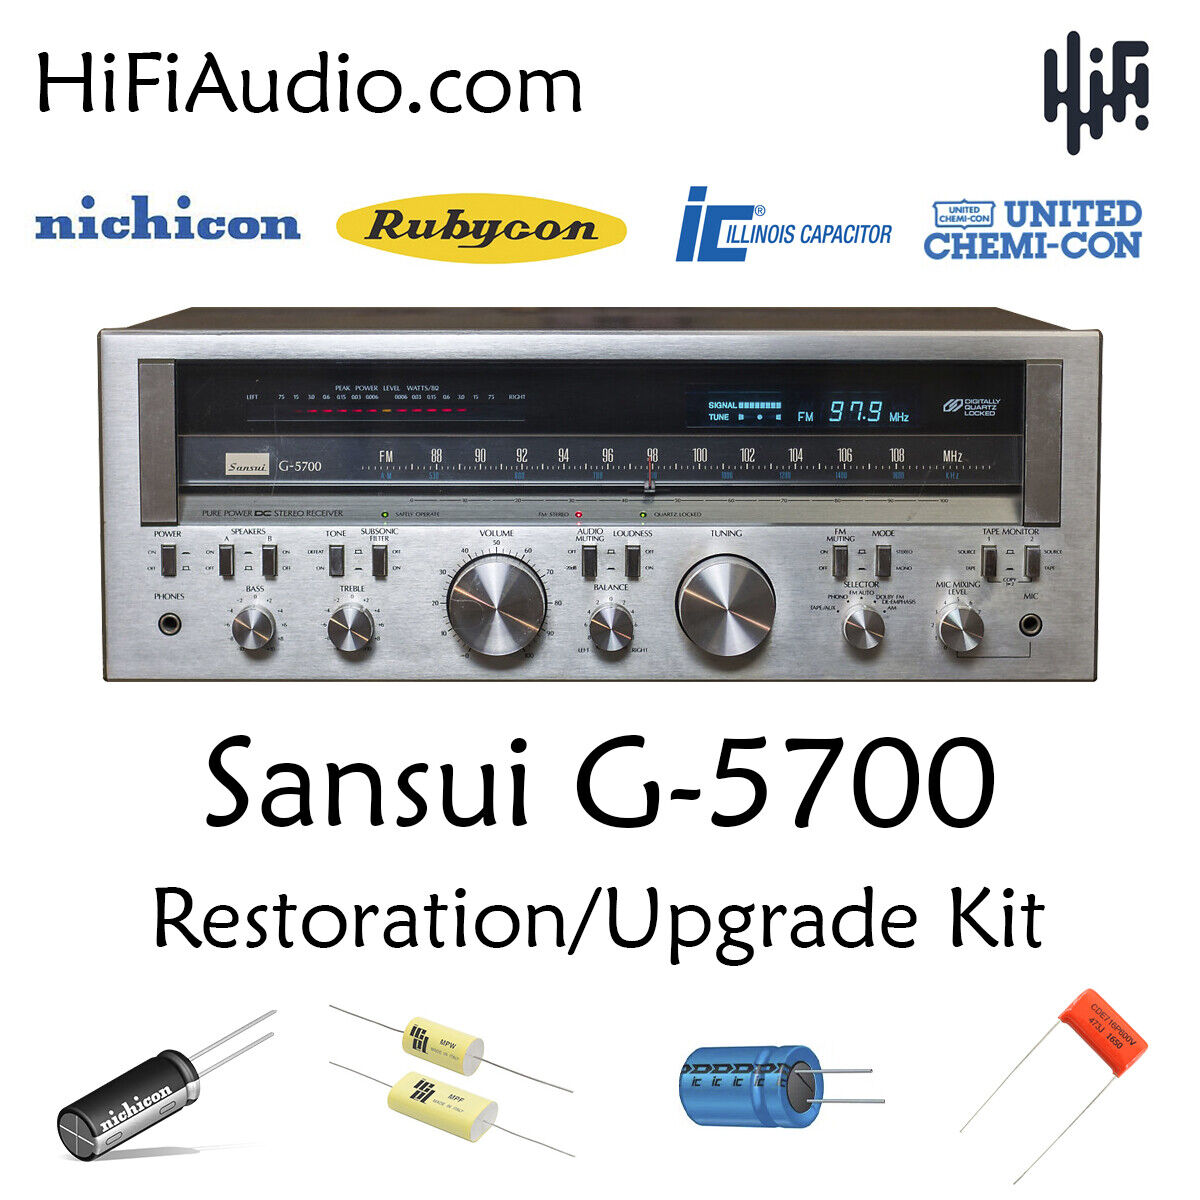 Sansui G-5700 rebuild restoration kit repair instructions fix filter capacitor